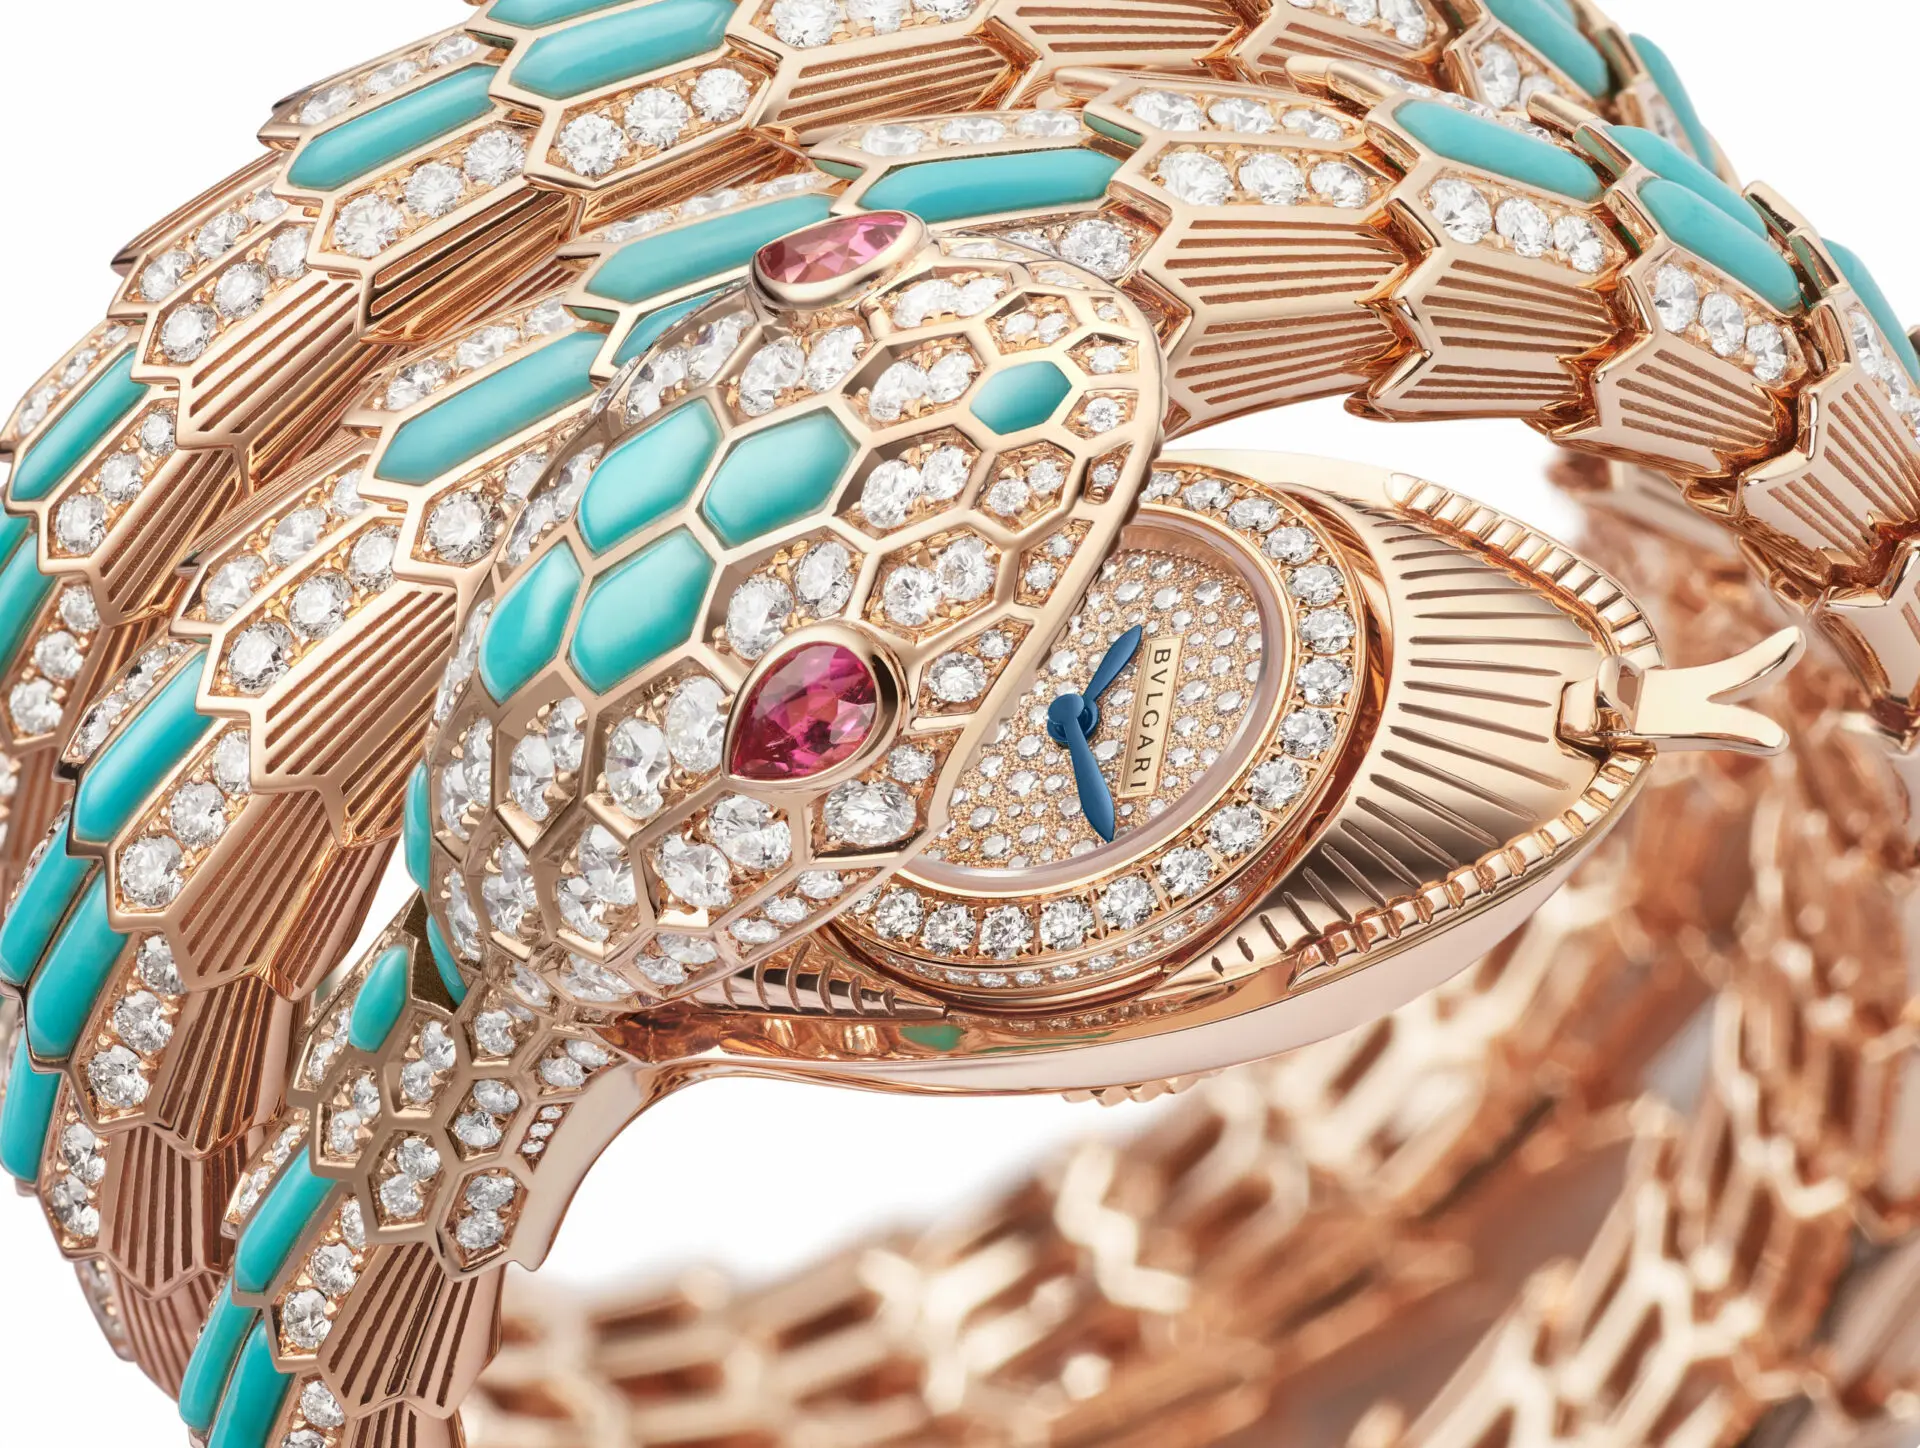 Bulgari, jewelry creations - Watches & Jewelry - LVMH